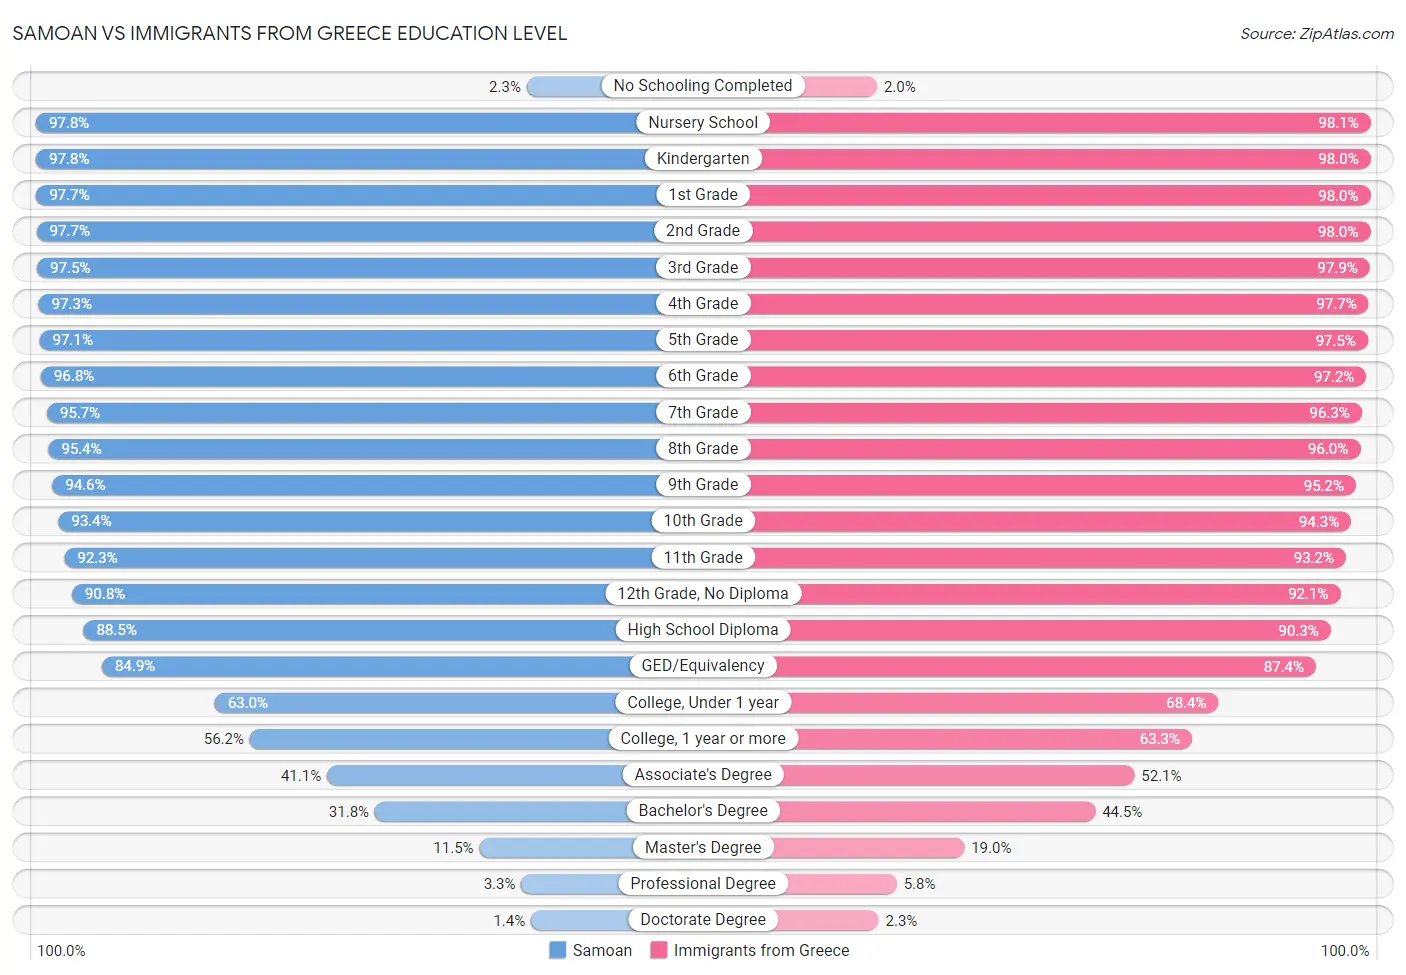 Samoan vs Immigrants from Greece Education Level